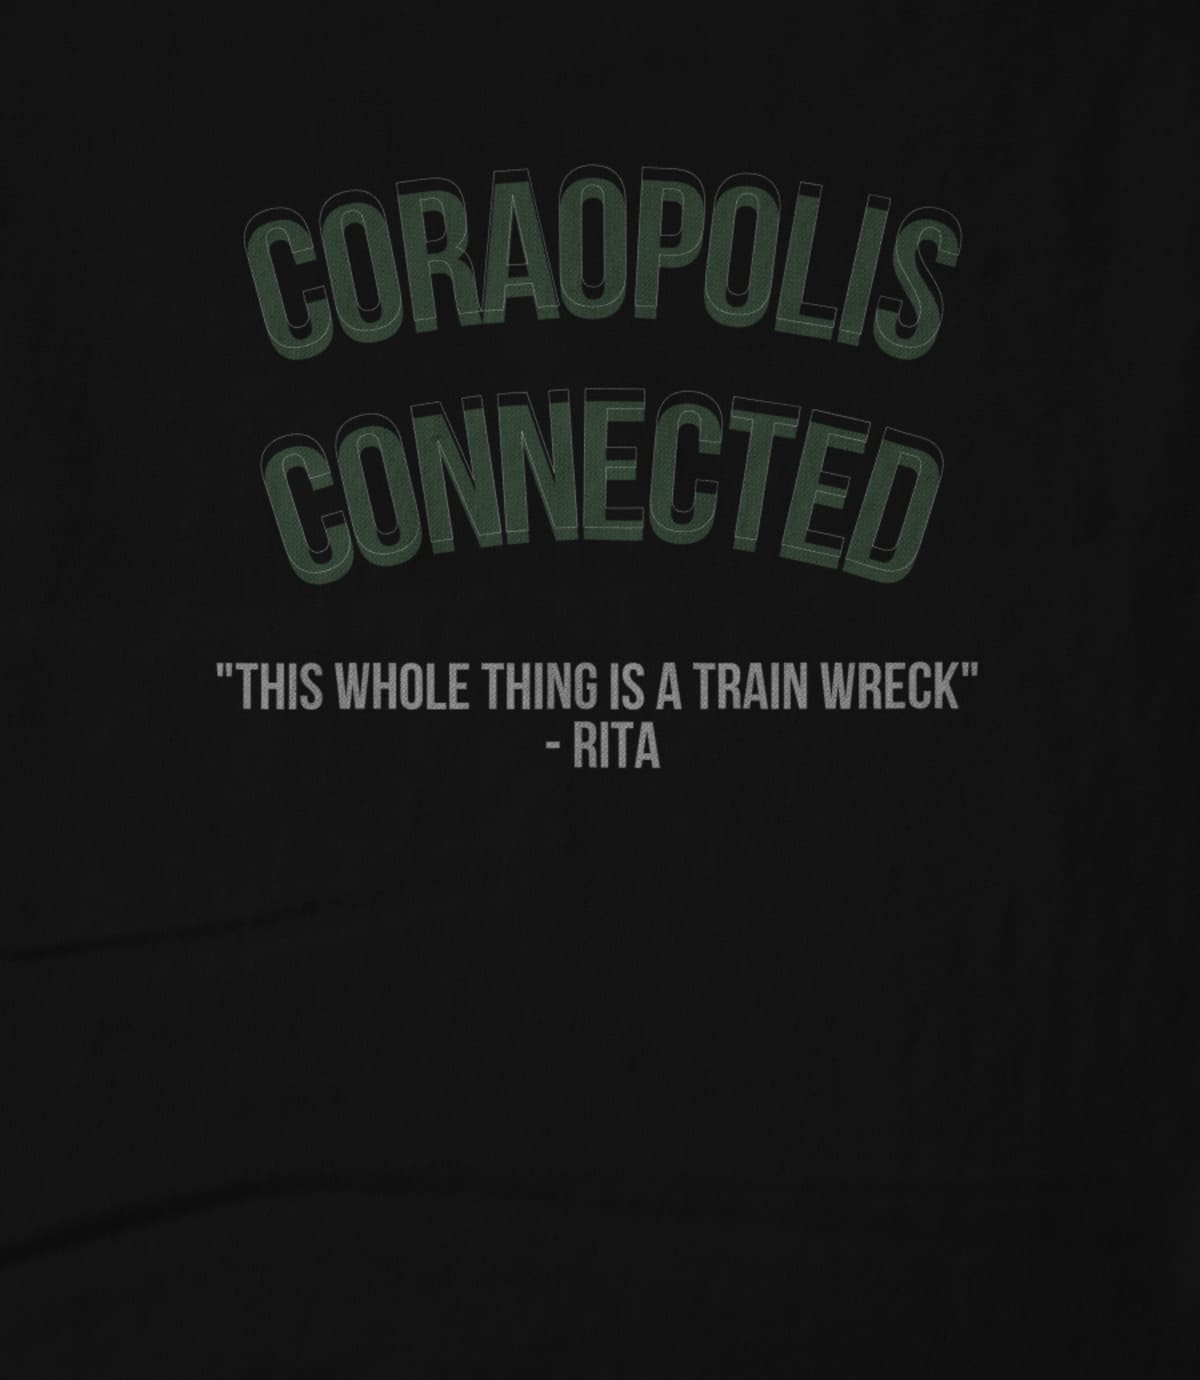 Coraopolis connected train wreck 1627756510